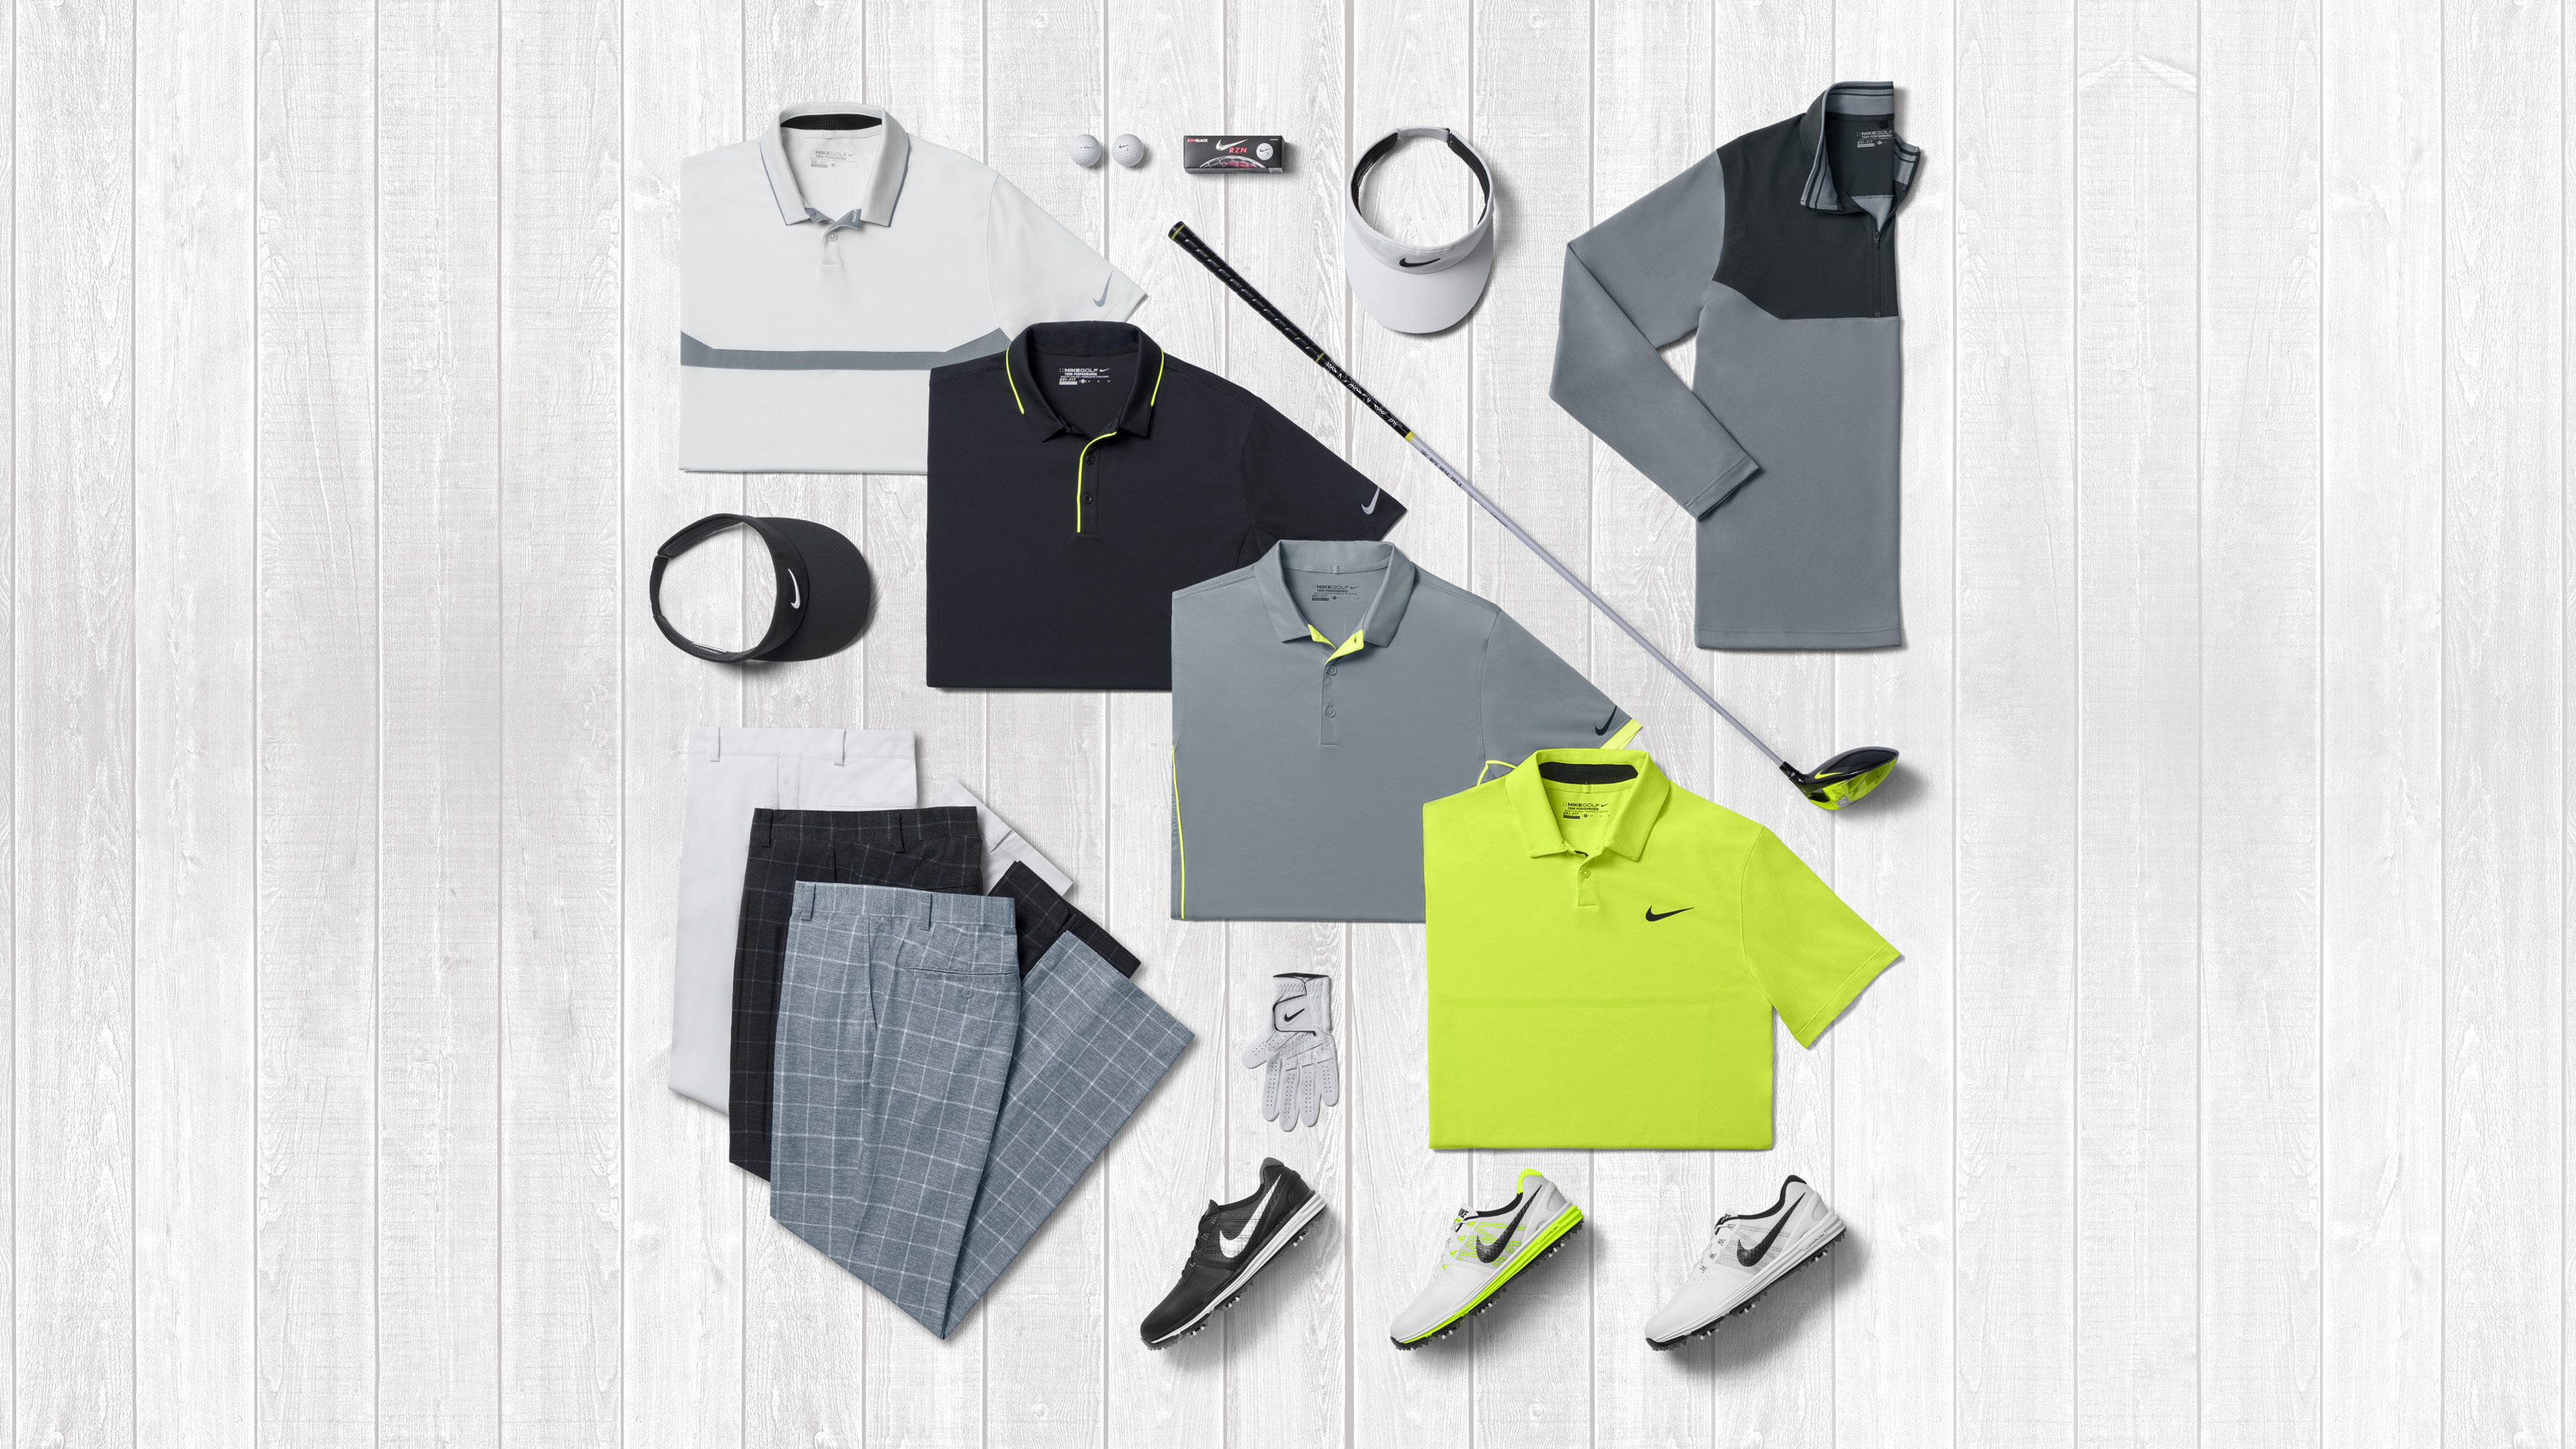 Russell Henley 2015 Major Look - Nike Golf